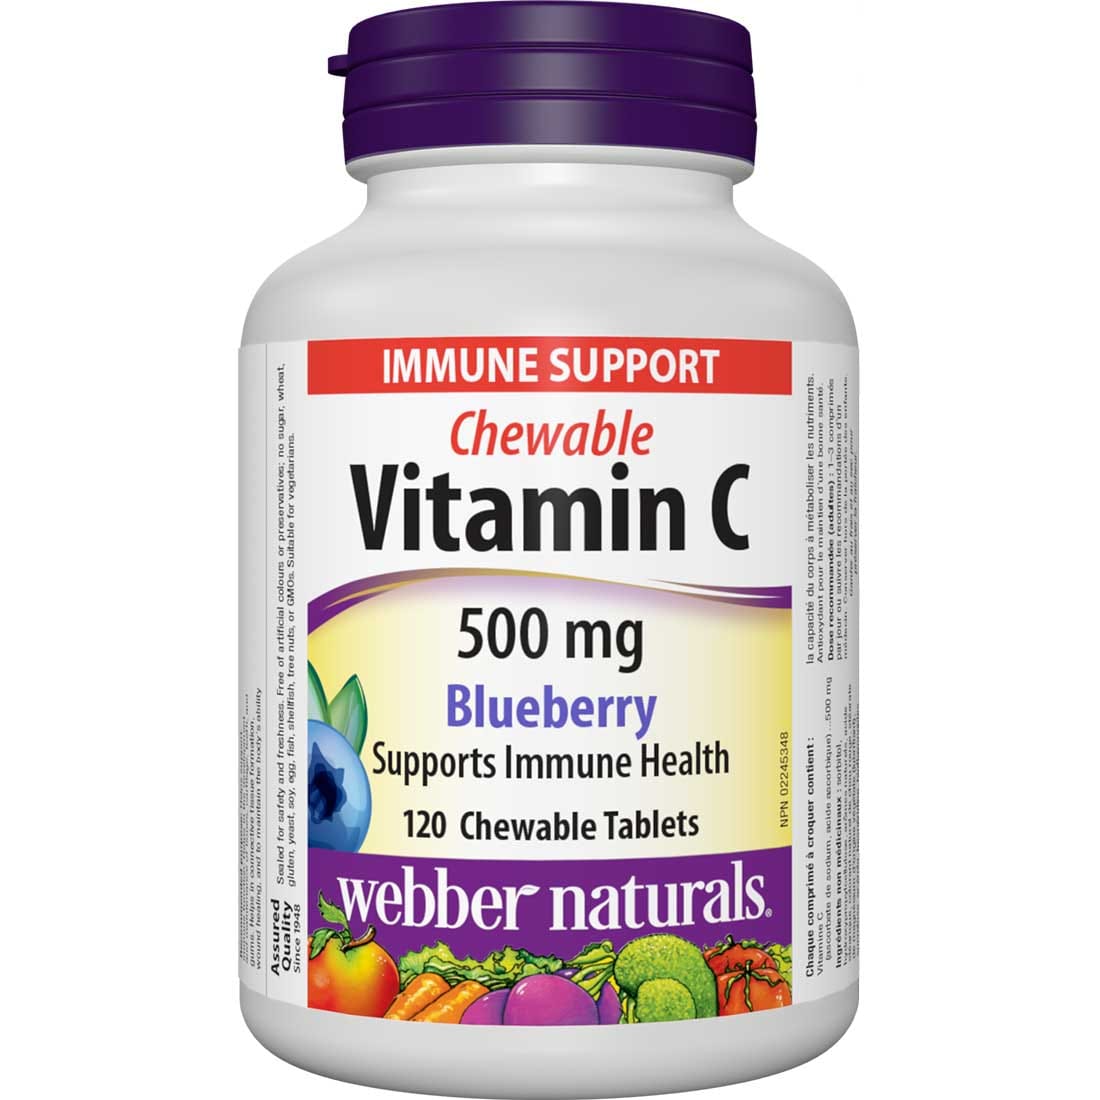 Webber Naturals Chewable Vitamin C 500mg